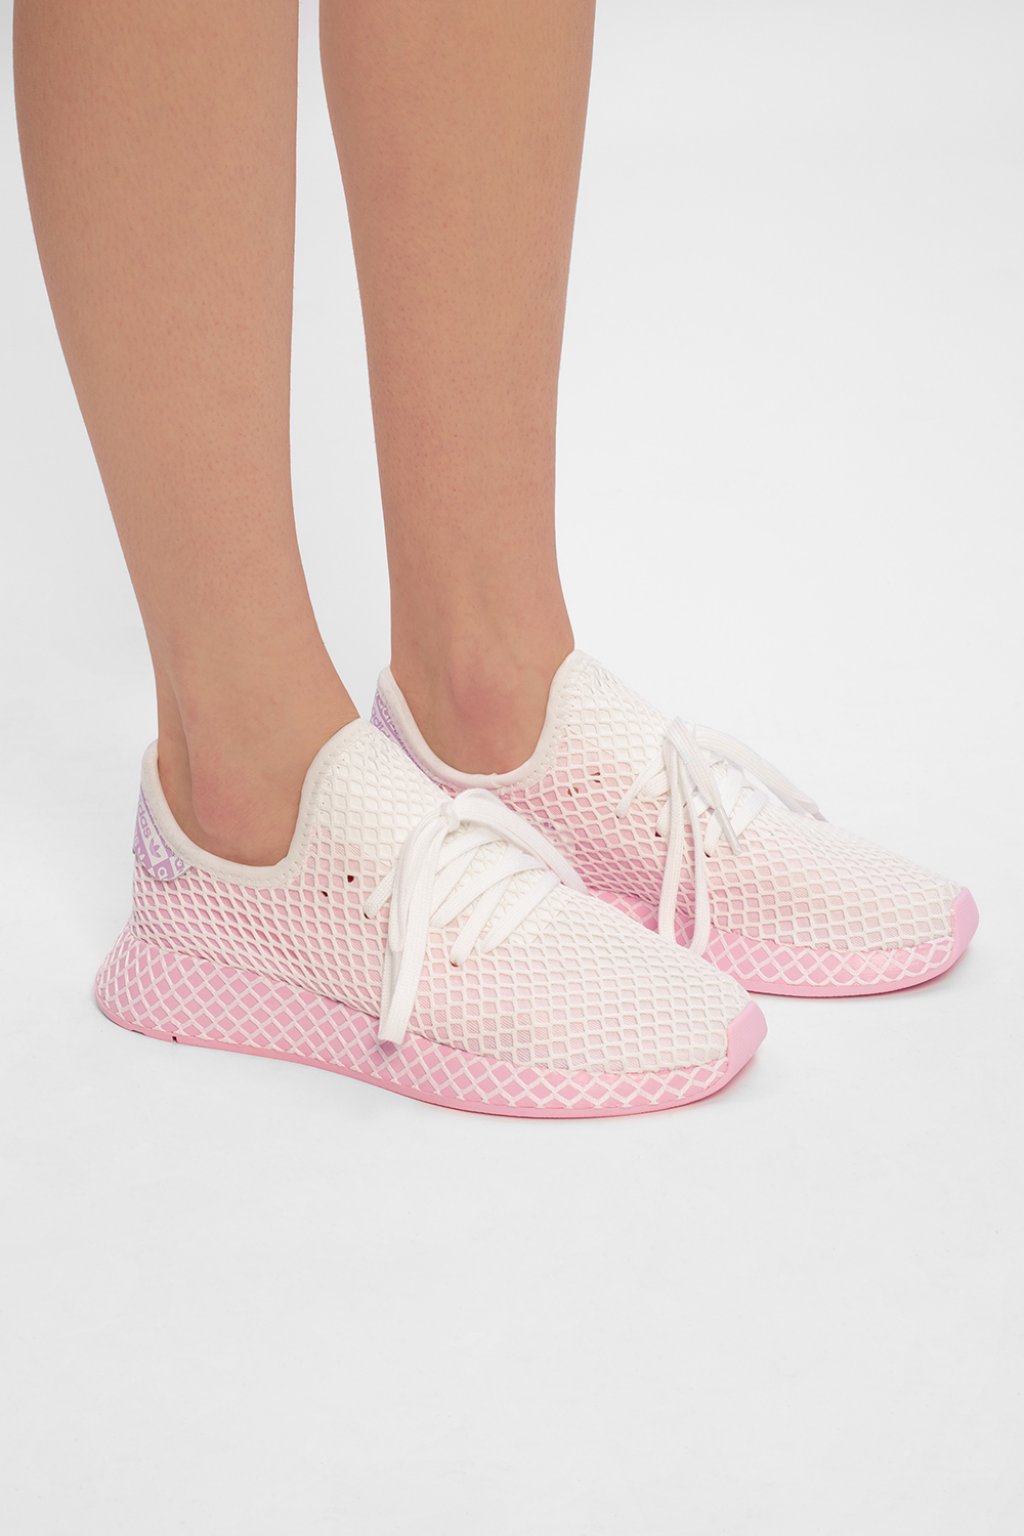 Perforering Skråstreg designer Pink 'Deerupt Runner' sneakers ADIDAS Originals - Vitkac TW